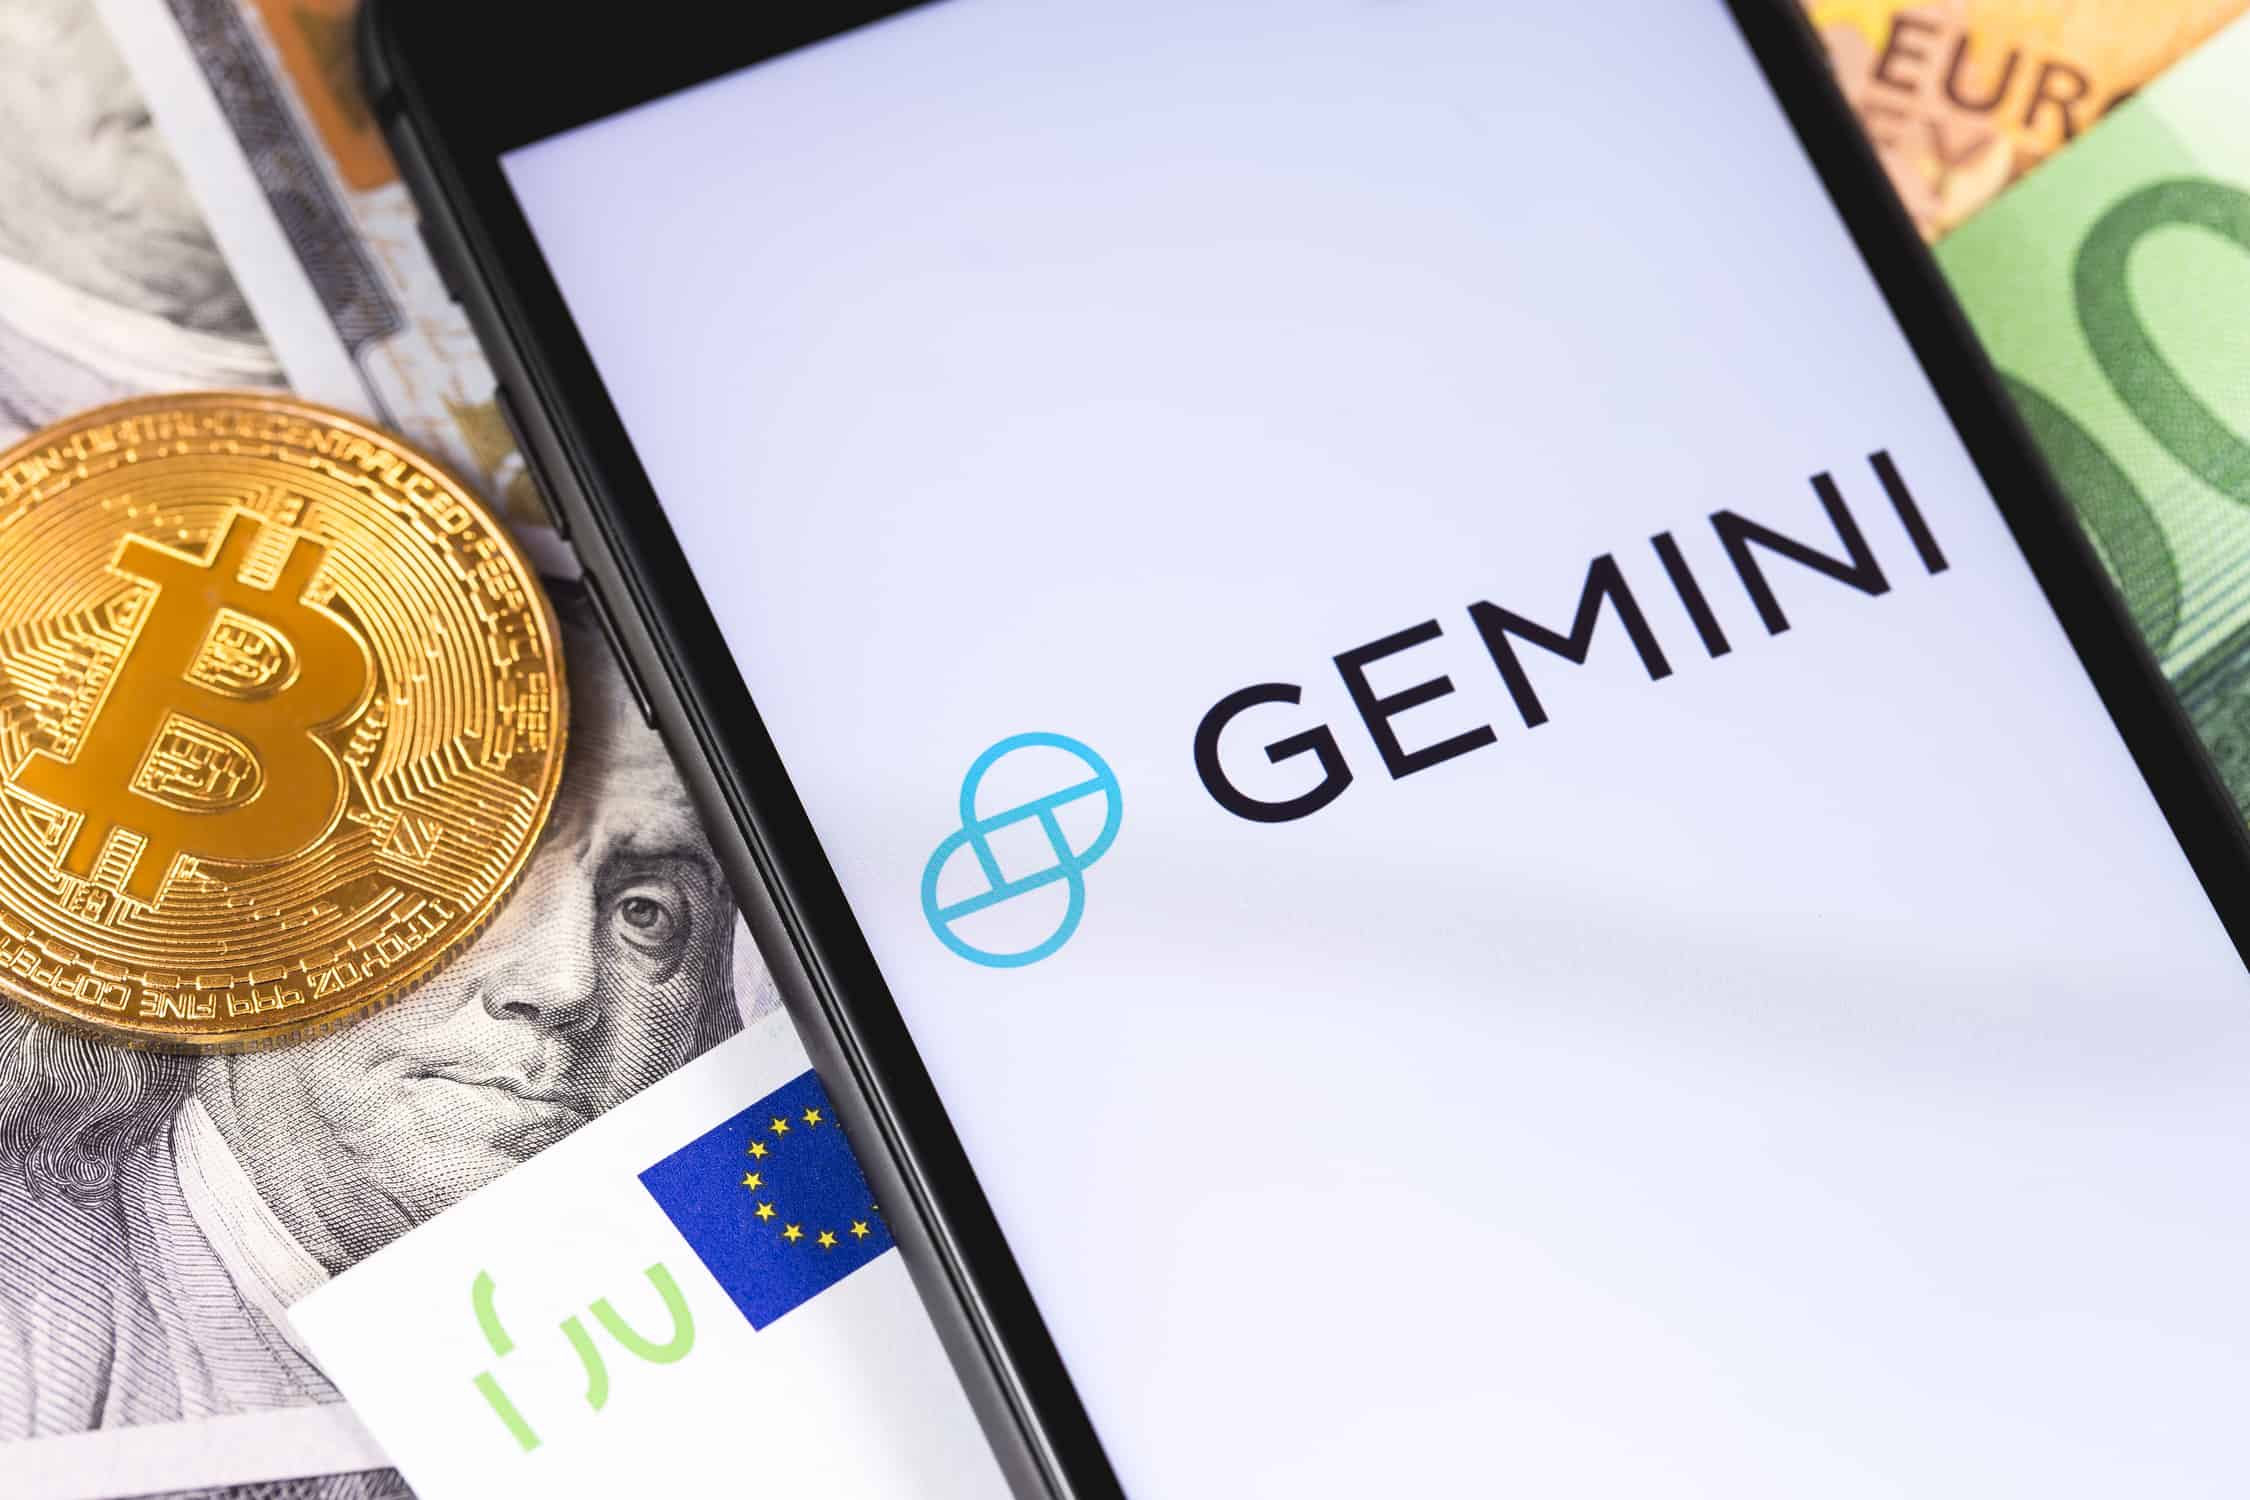 Gemini Launches Gemini Clearing, OTC Trading for Everyone